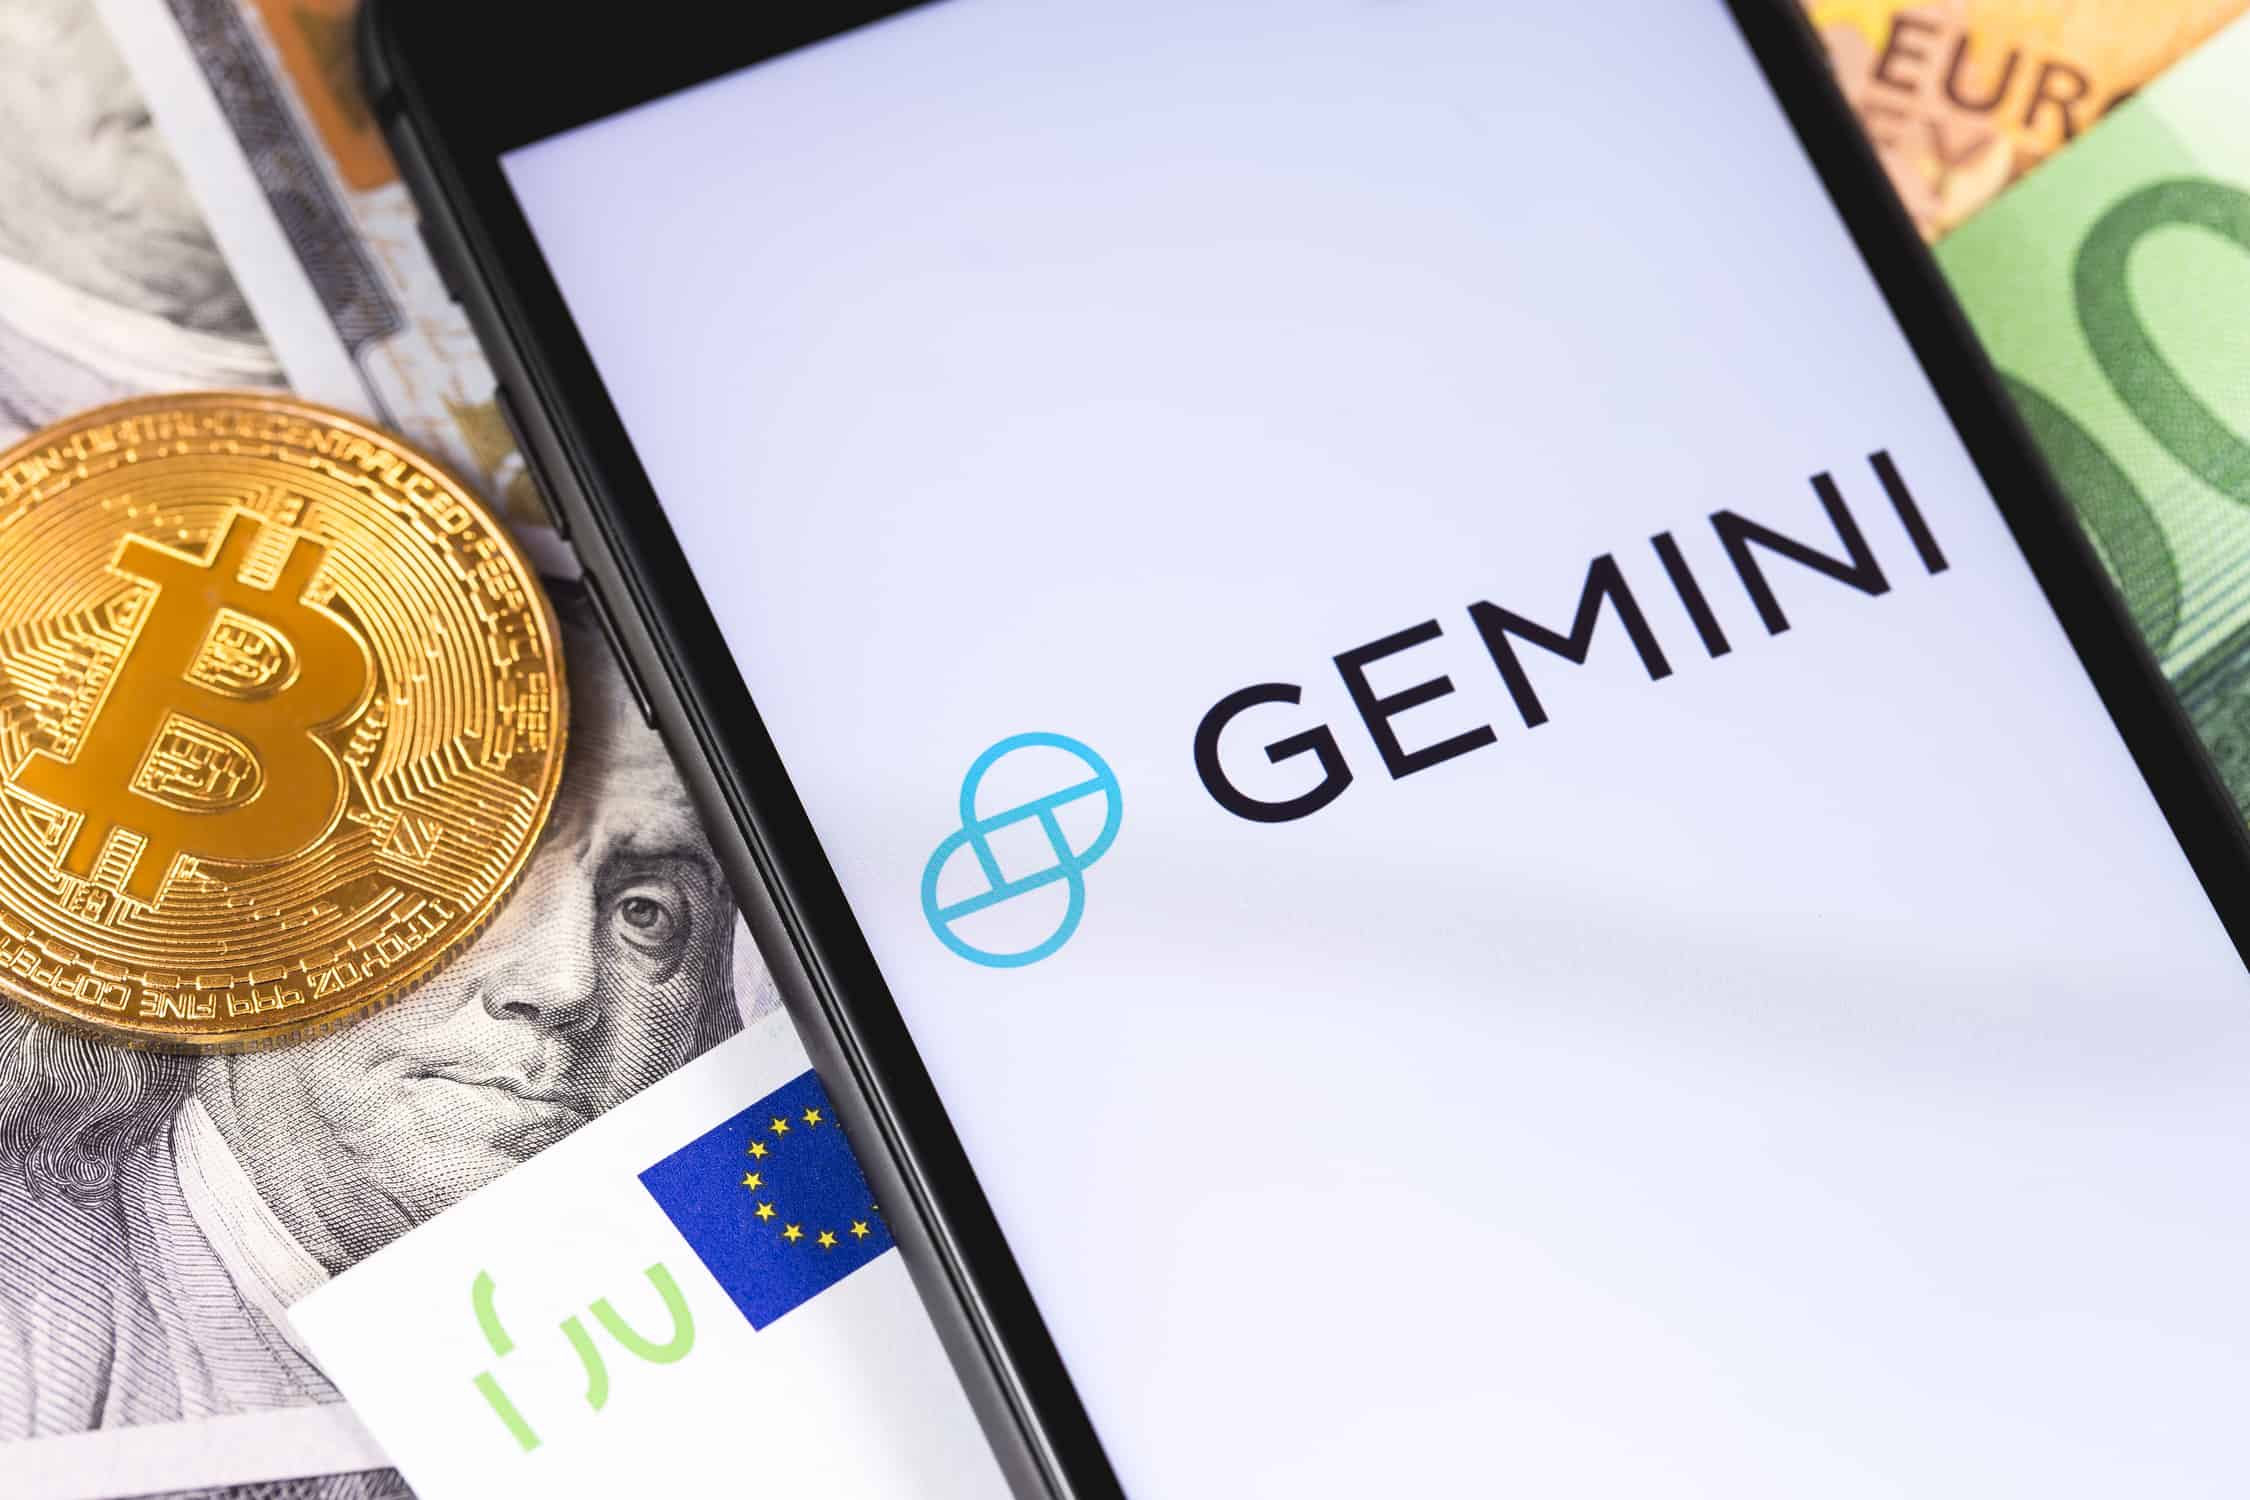 Gemini Launches Gemini Clearing, OTC Trading for Everyone